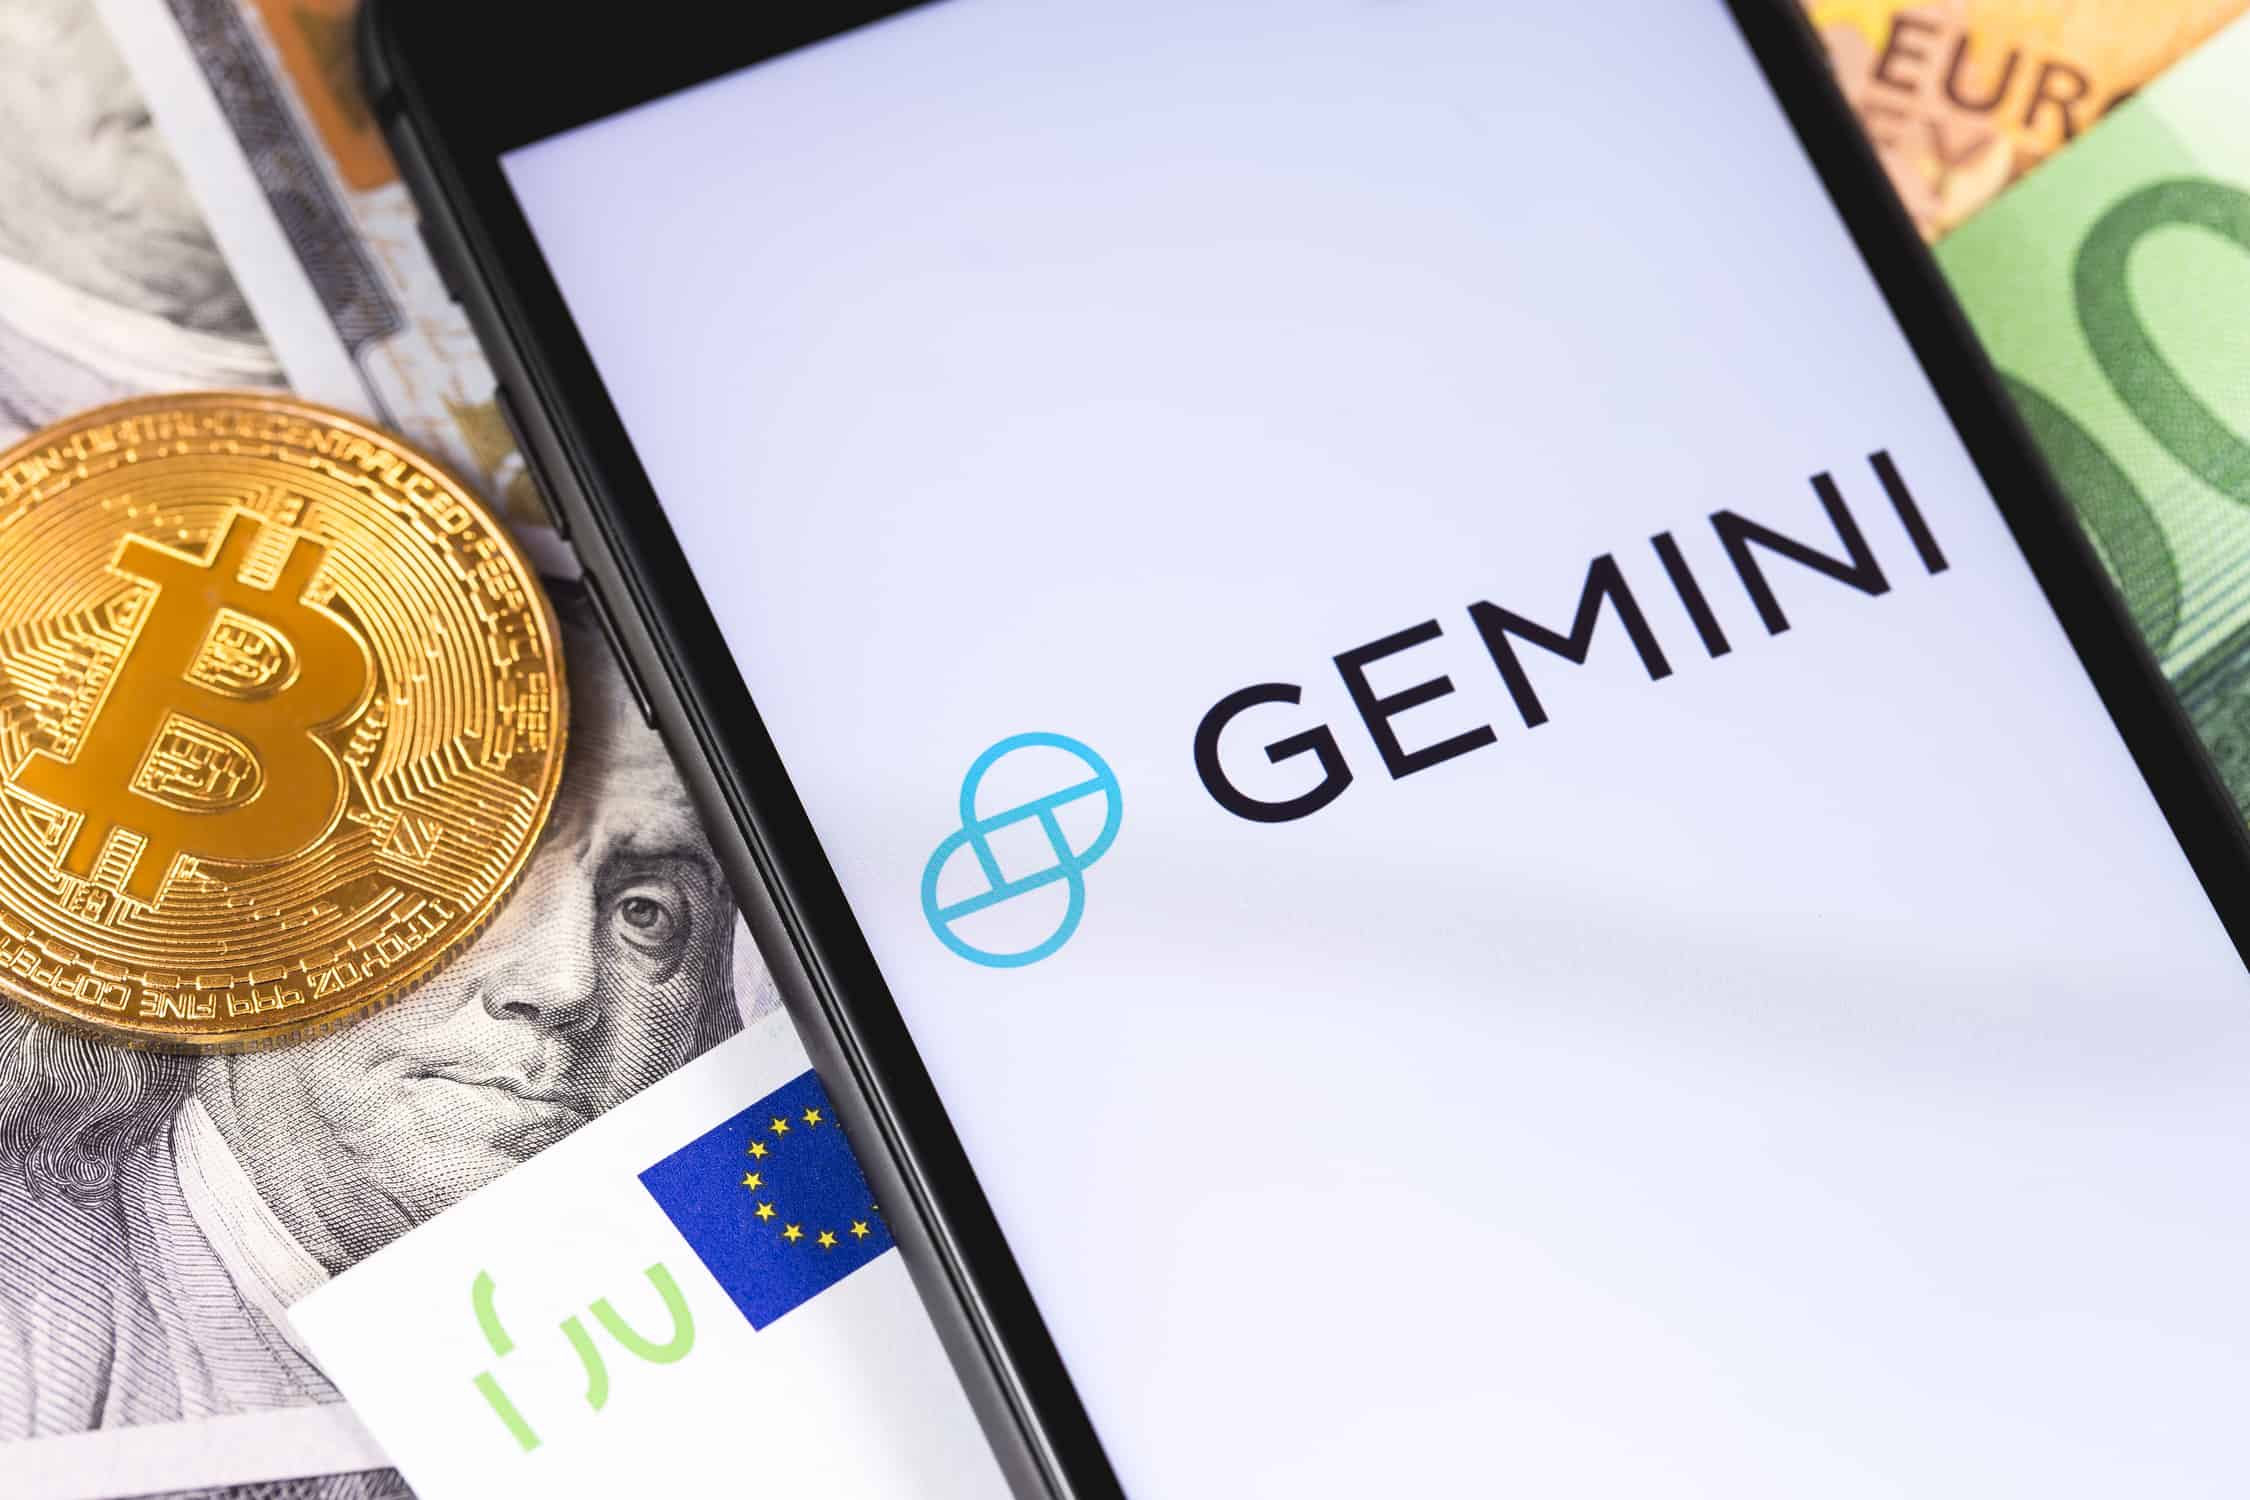 Gemini Launches Gemini Clearing, OTC Trading for Everyone